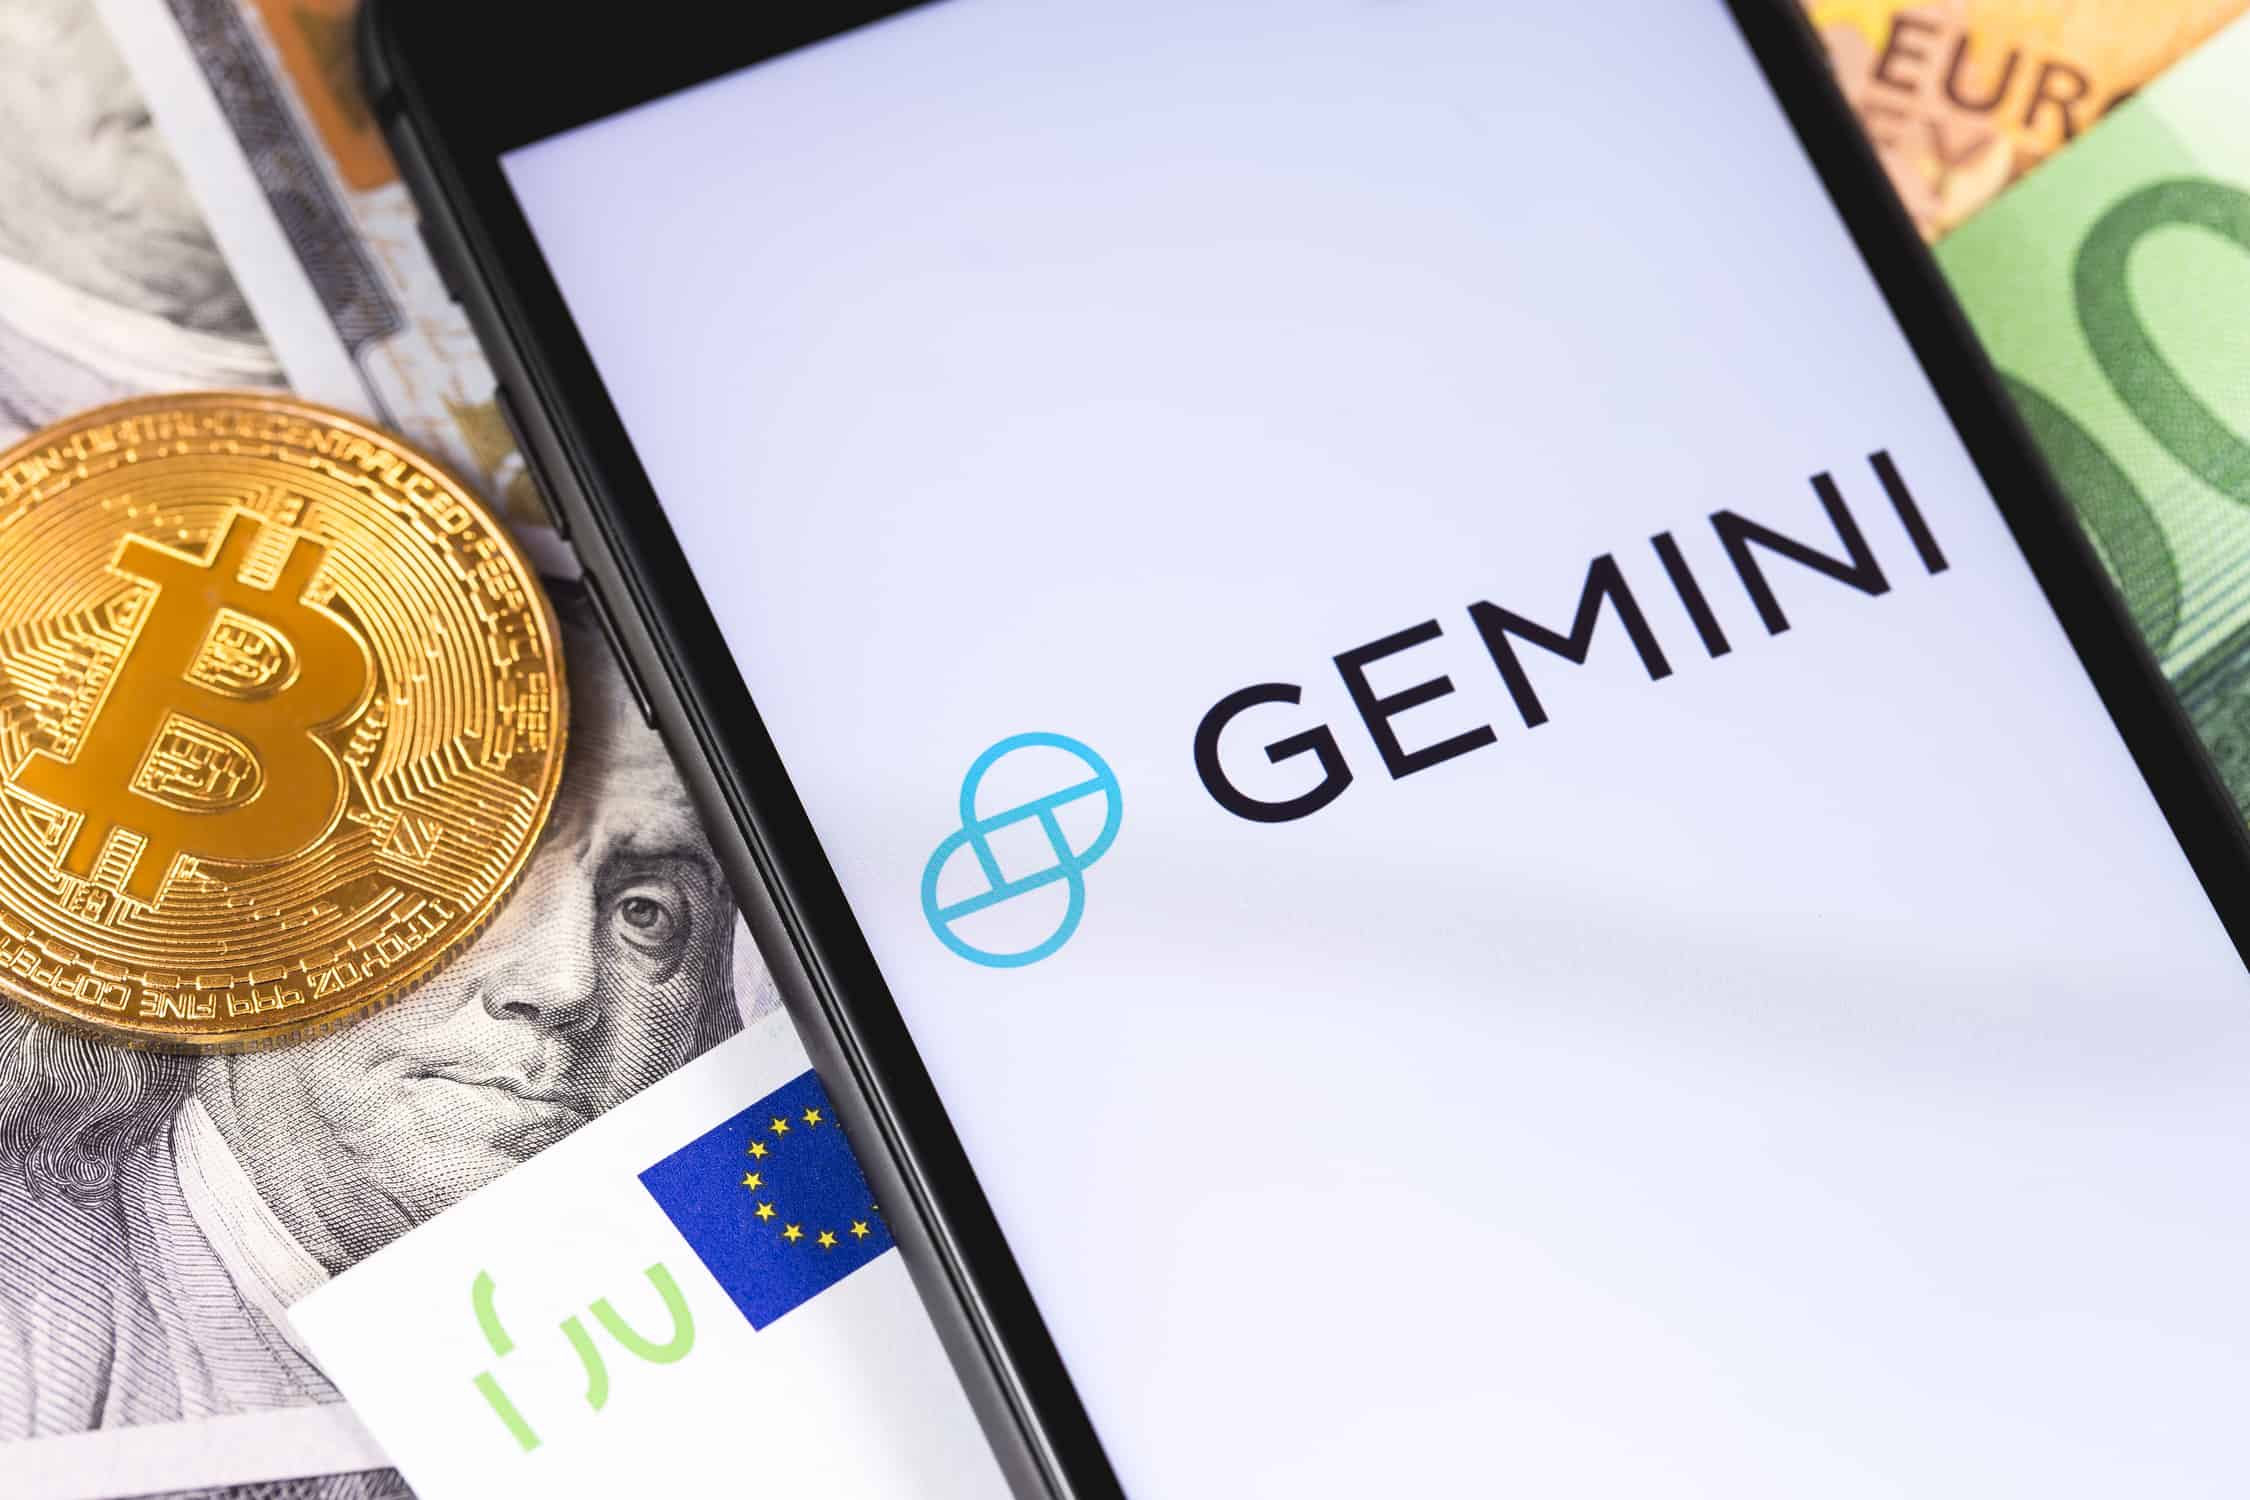 Gemini Launches Gemini Clearing, OTC Trading for Everyone